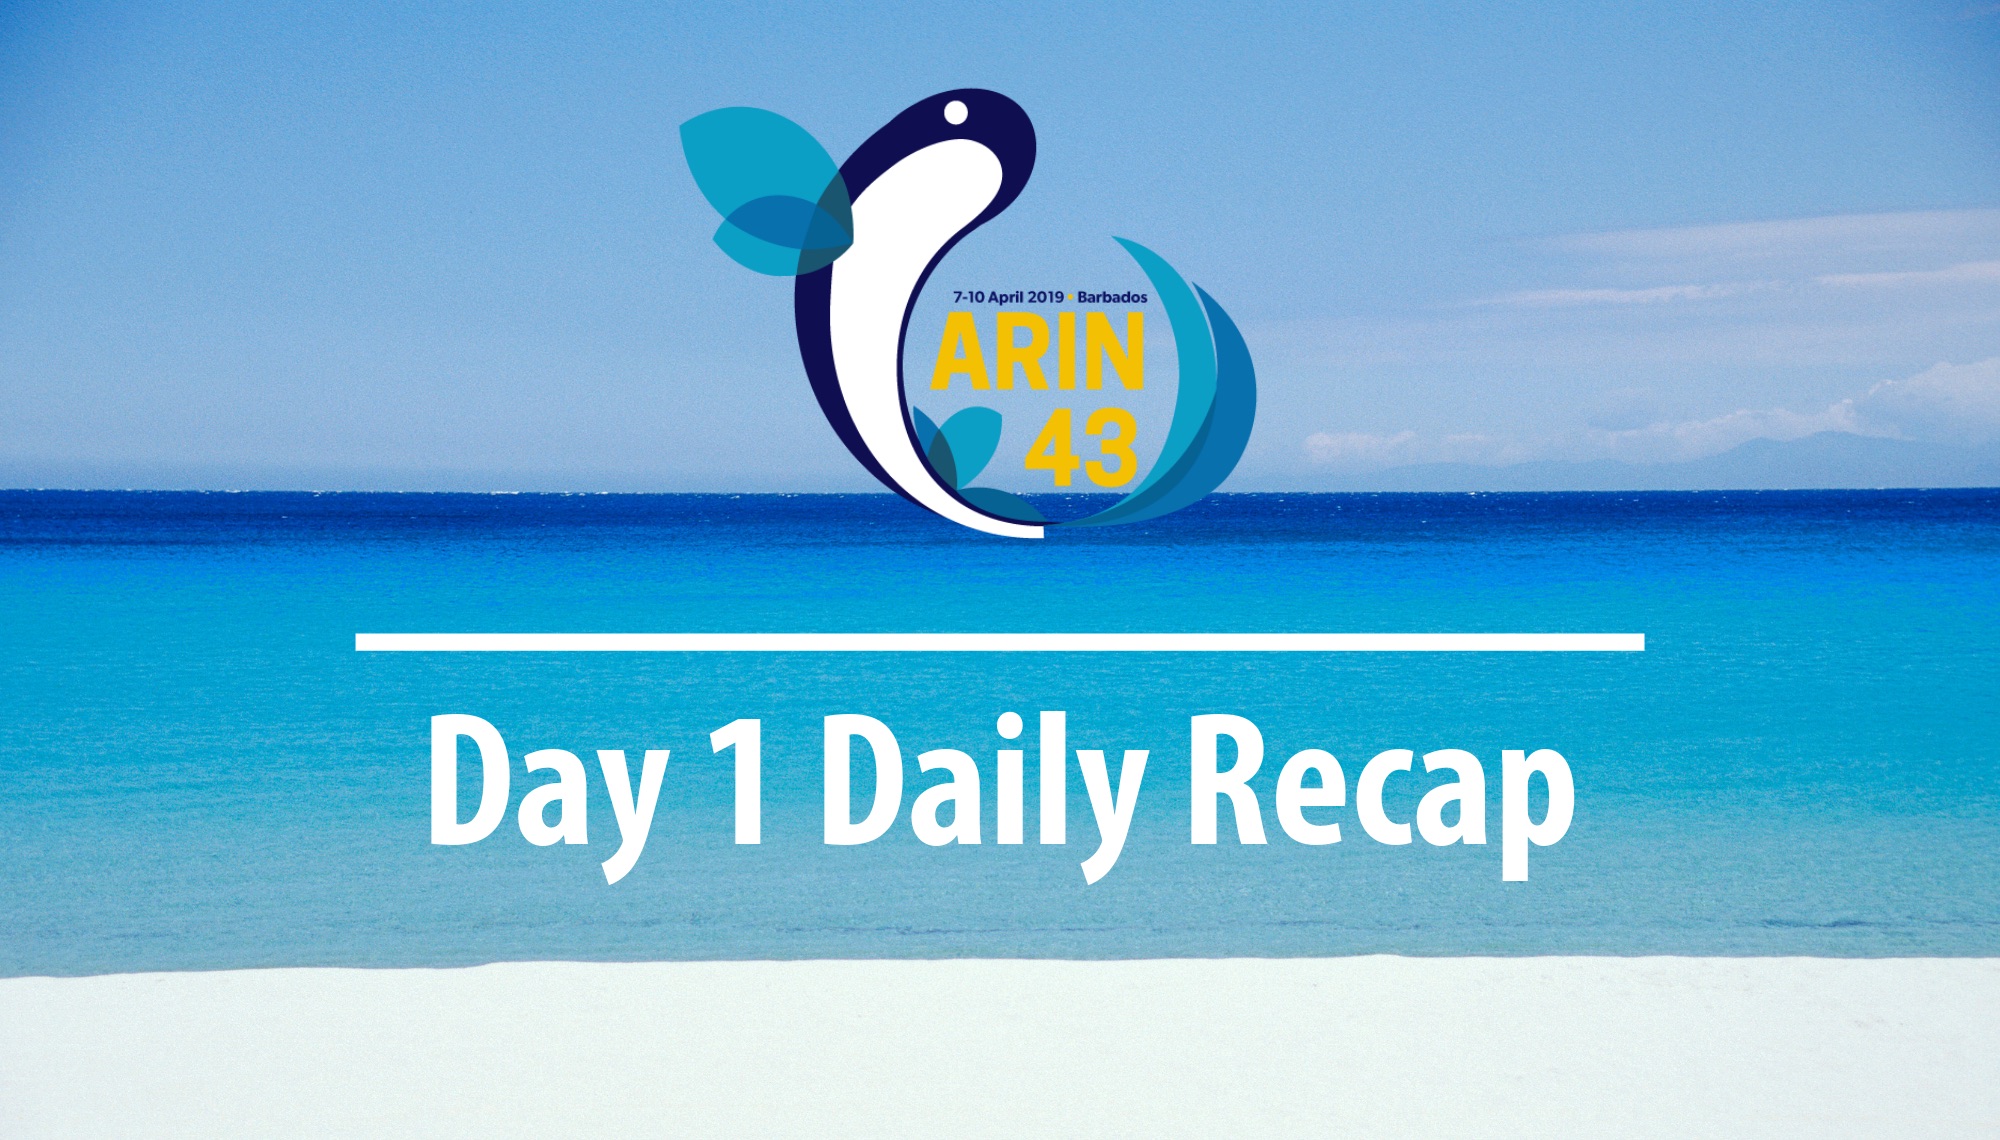 ARIN 43 Day 1 Daily Recap